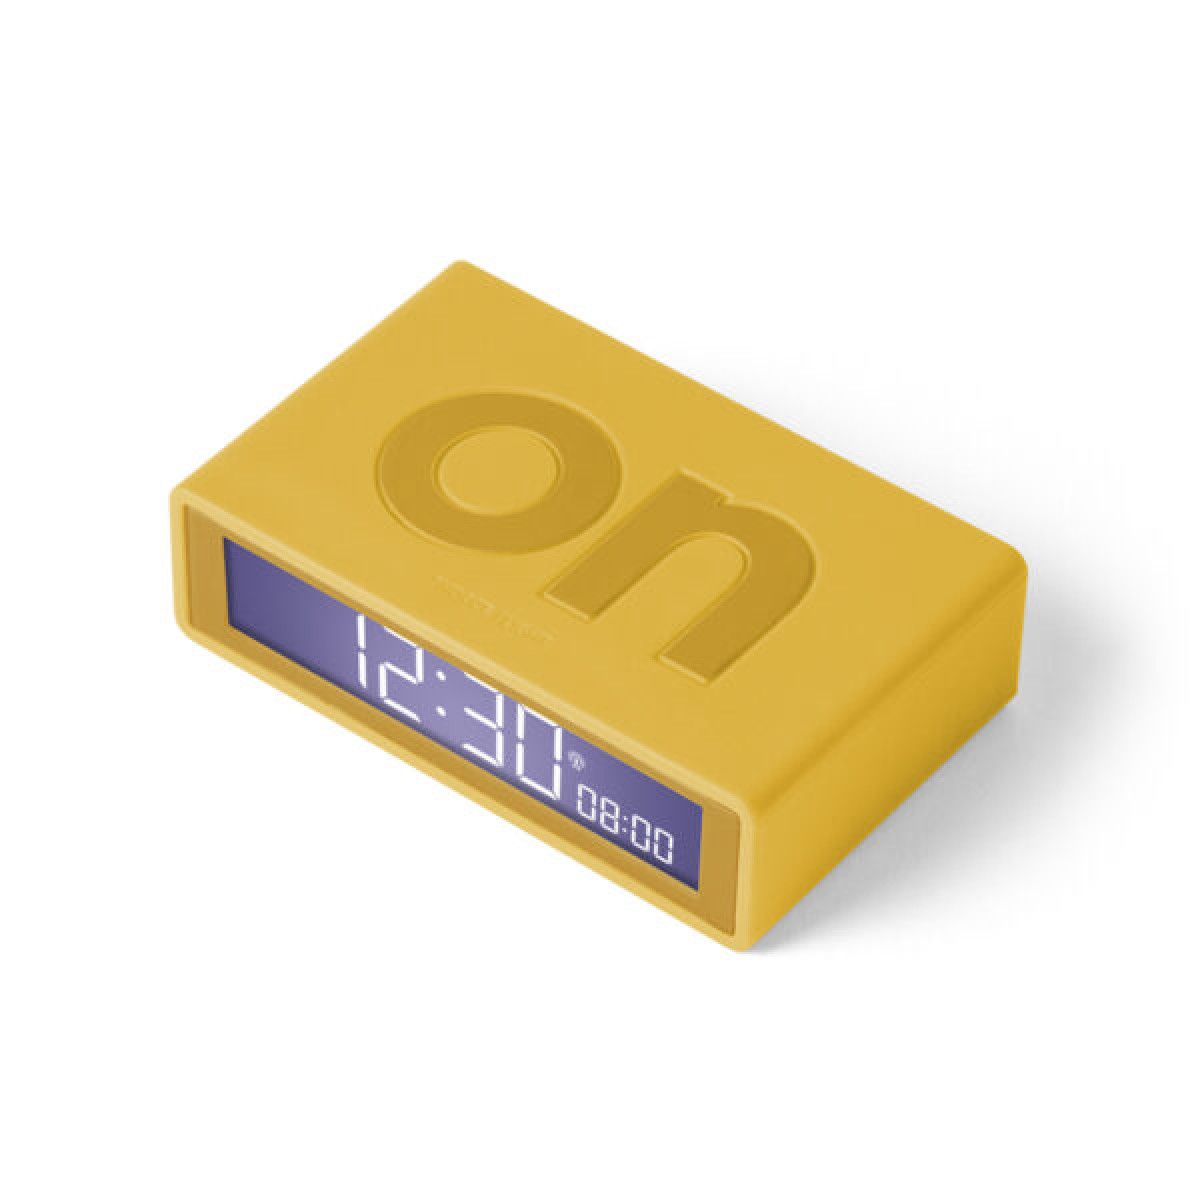 Lexon - Flip - Reversible LCD alarm clock - Rubber Yellow